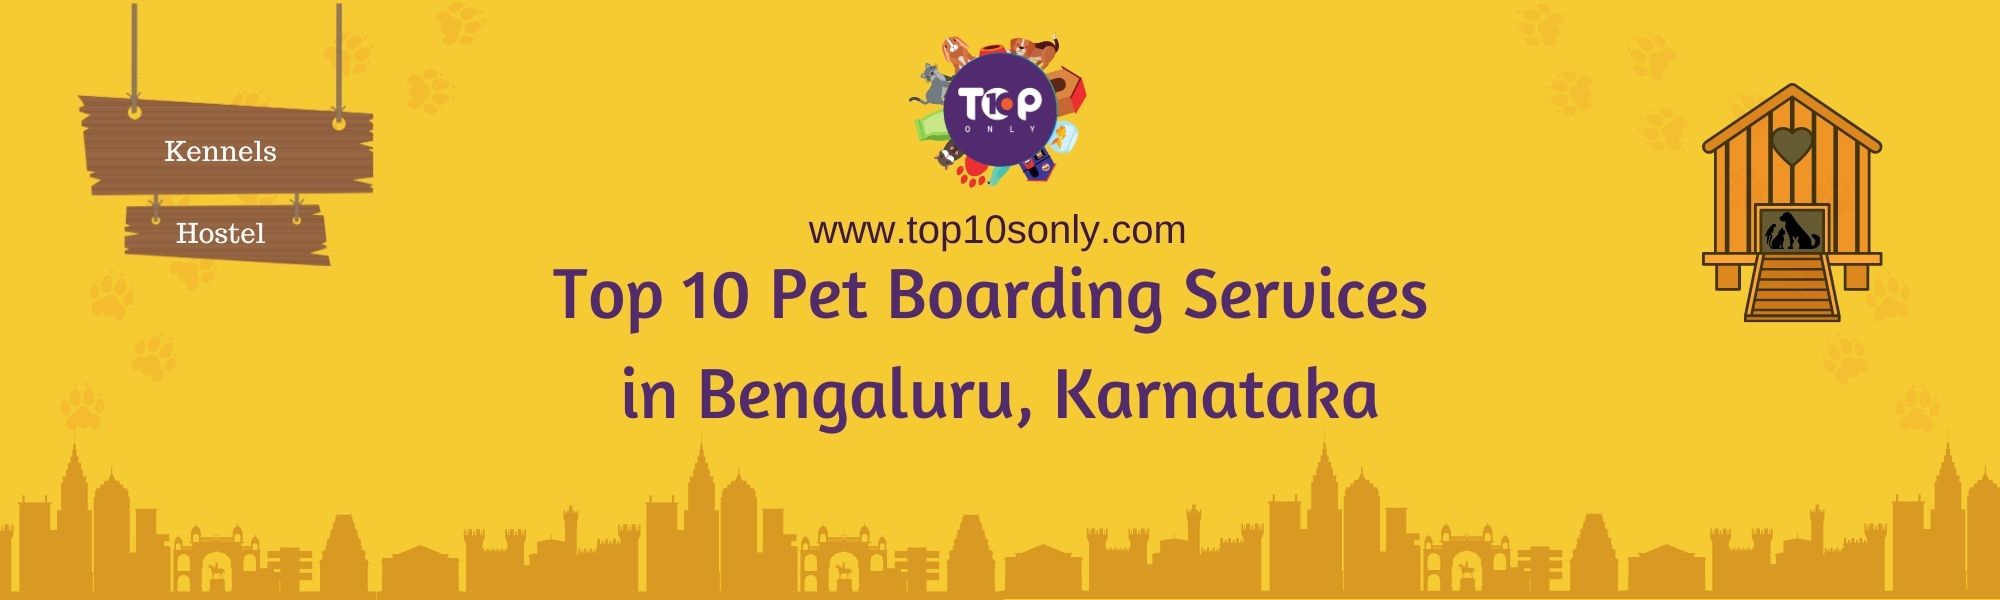 top 10 pet boarding services in bengaluru, karnataka(1800x600)